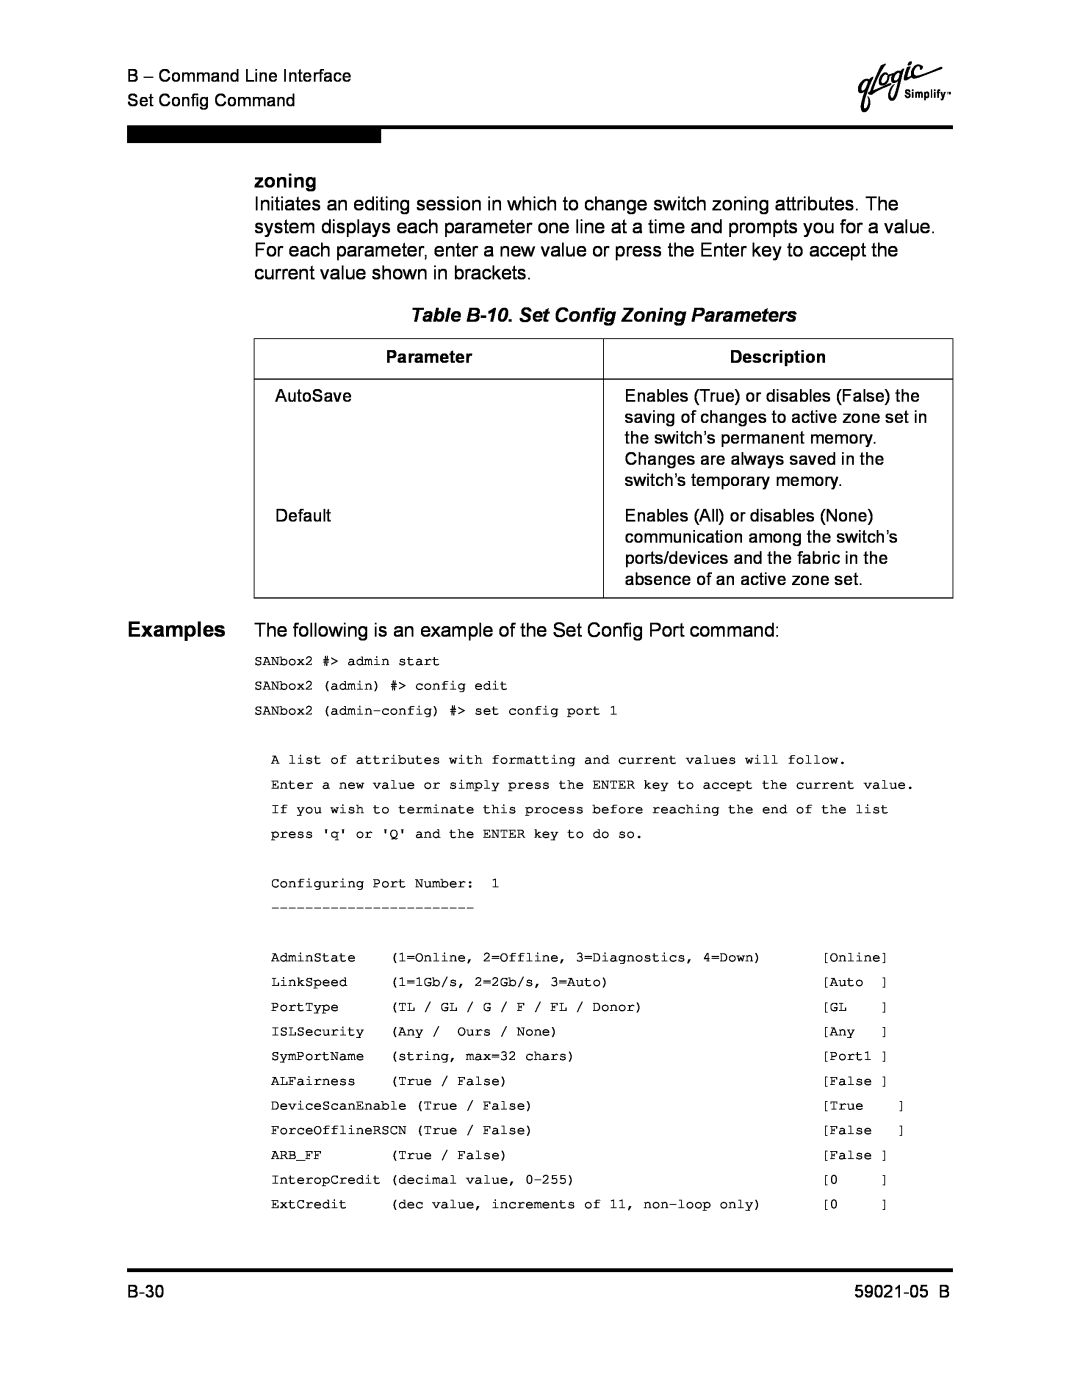 Q-Logic 59021-05 B manual Table B-10. Set Config Zoning Parameters, Description 